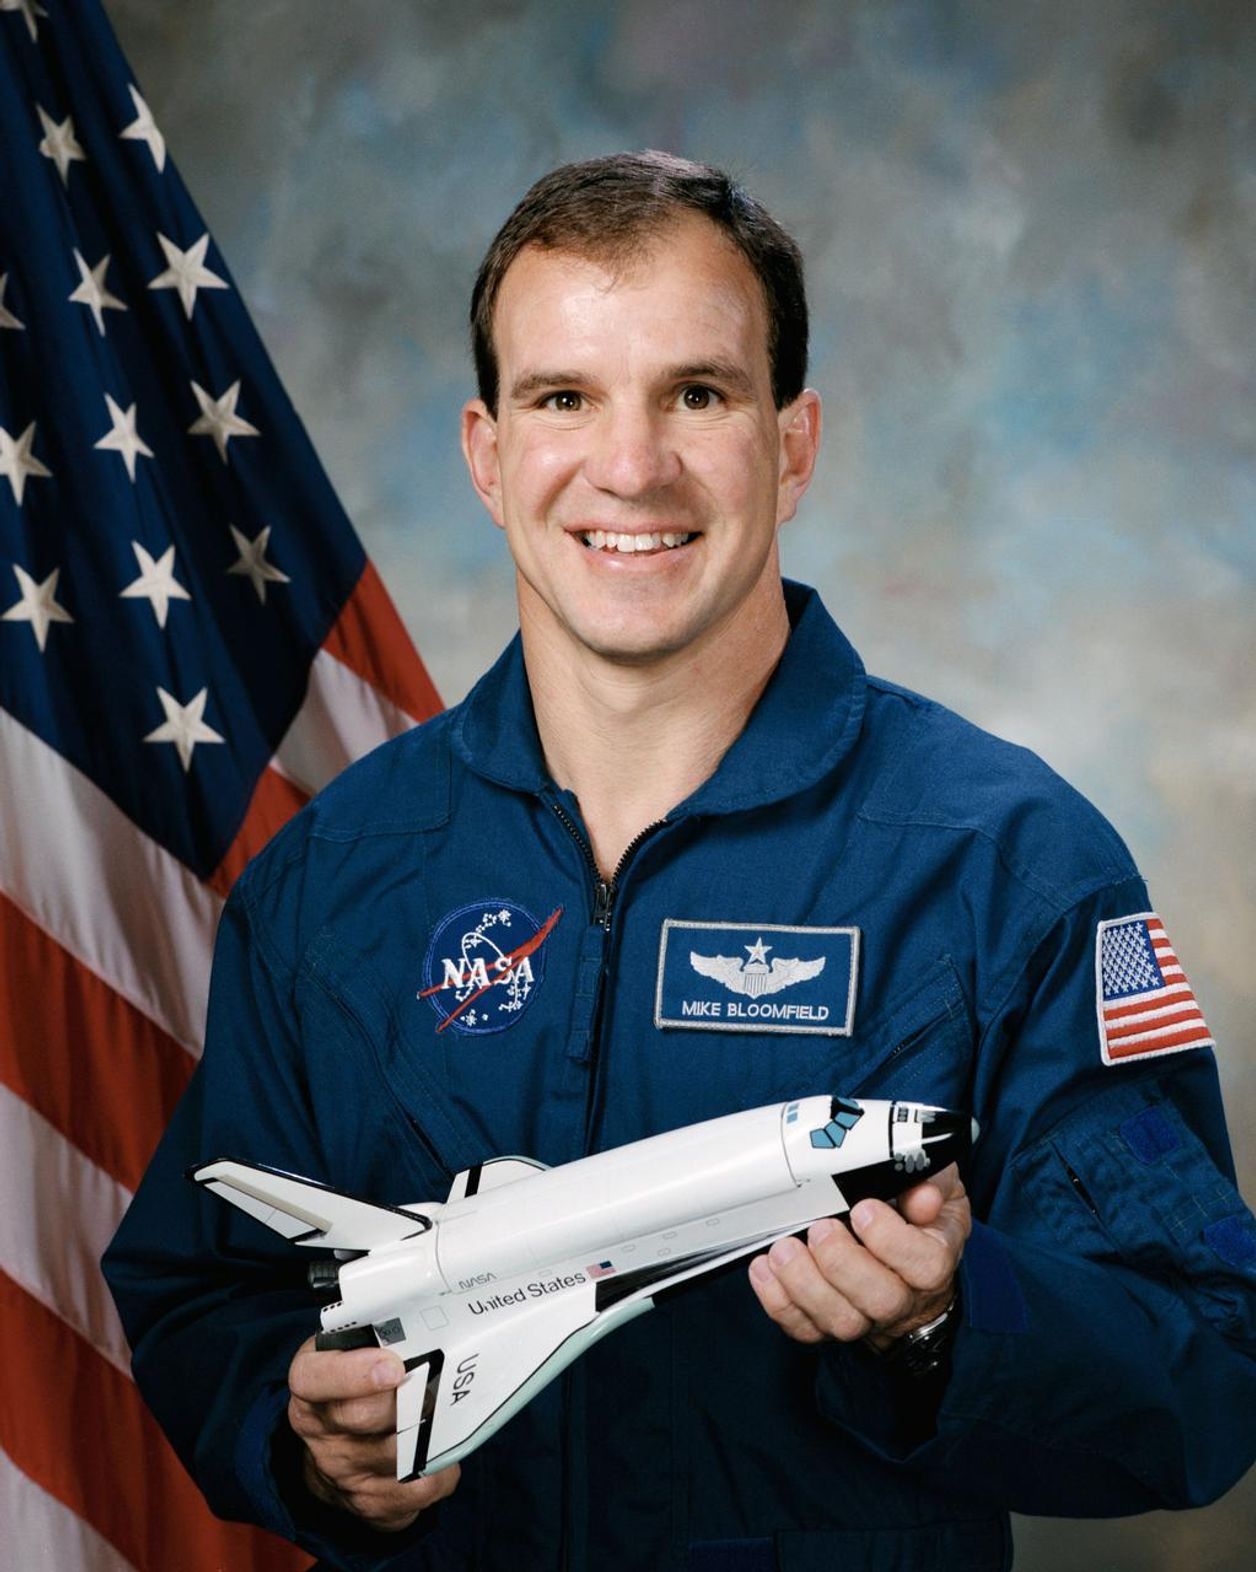 astronaut michael j